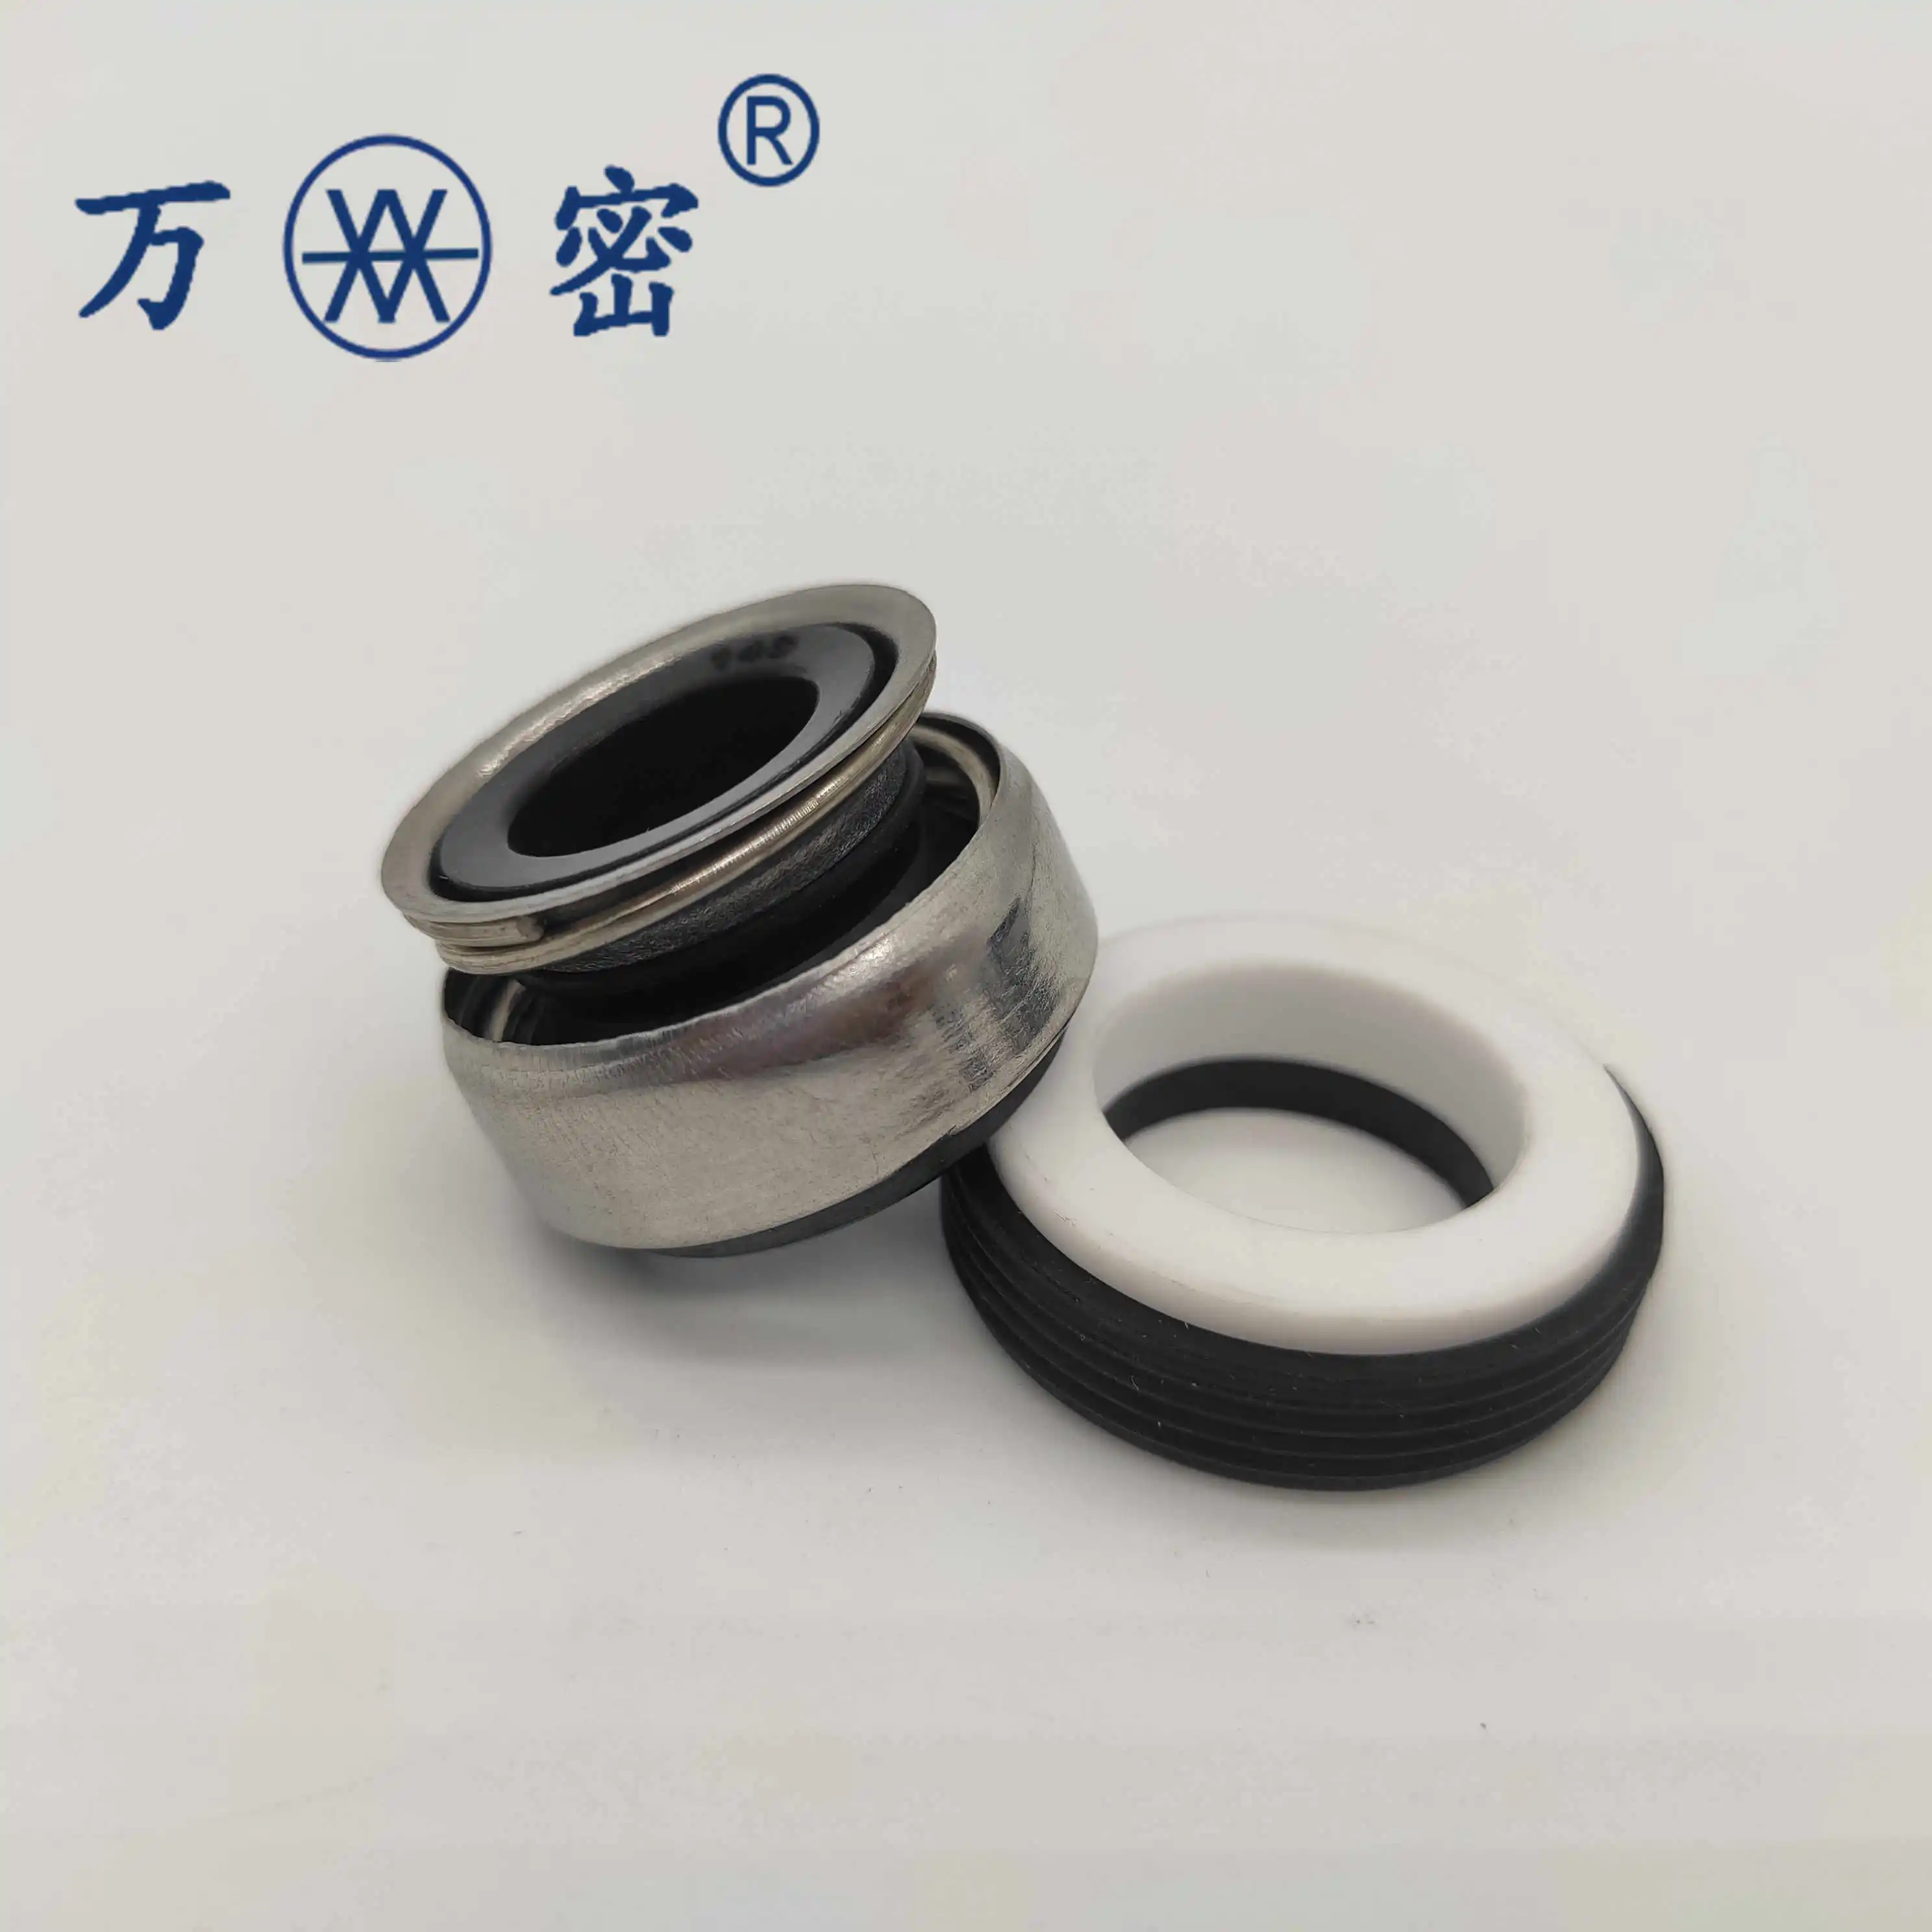 WM 301-14 ceramic carbon water pump seal/mechanical seals for shaft pump/component mechanical seal